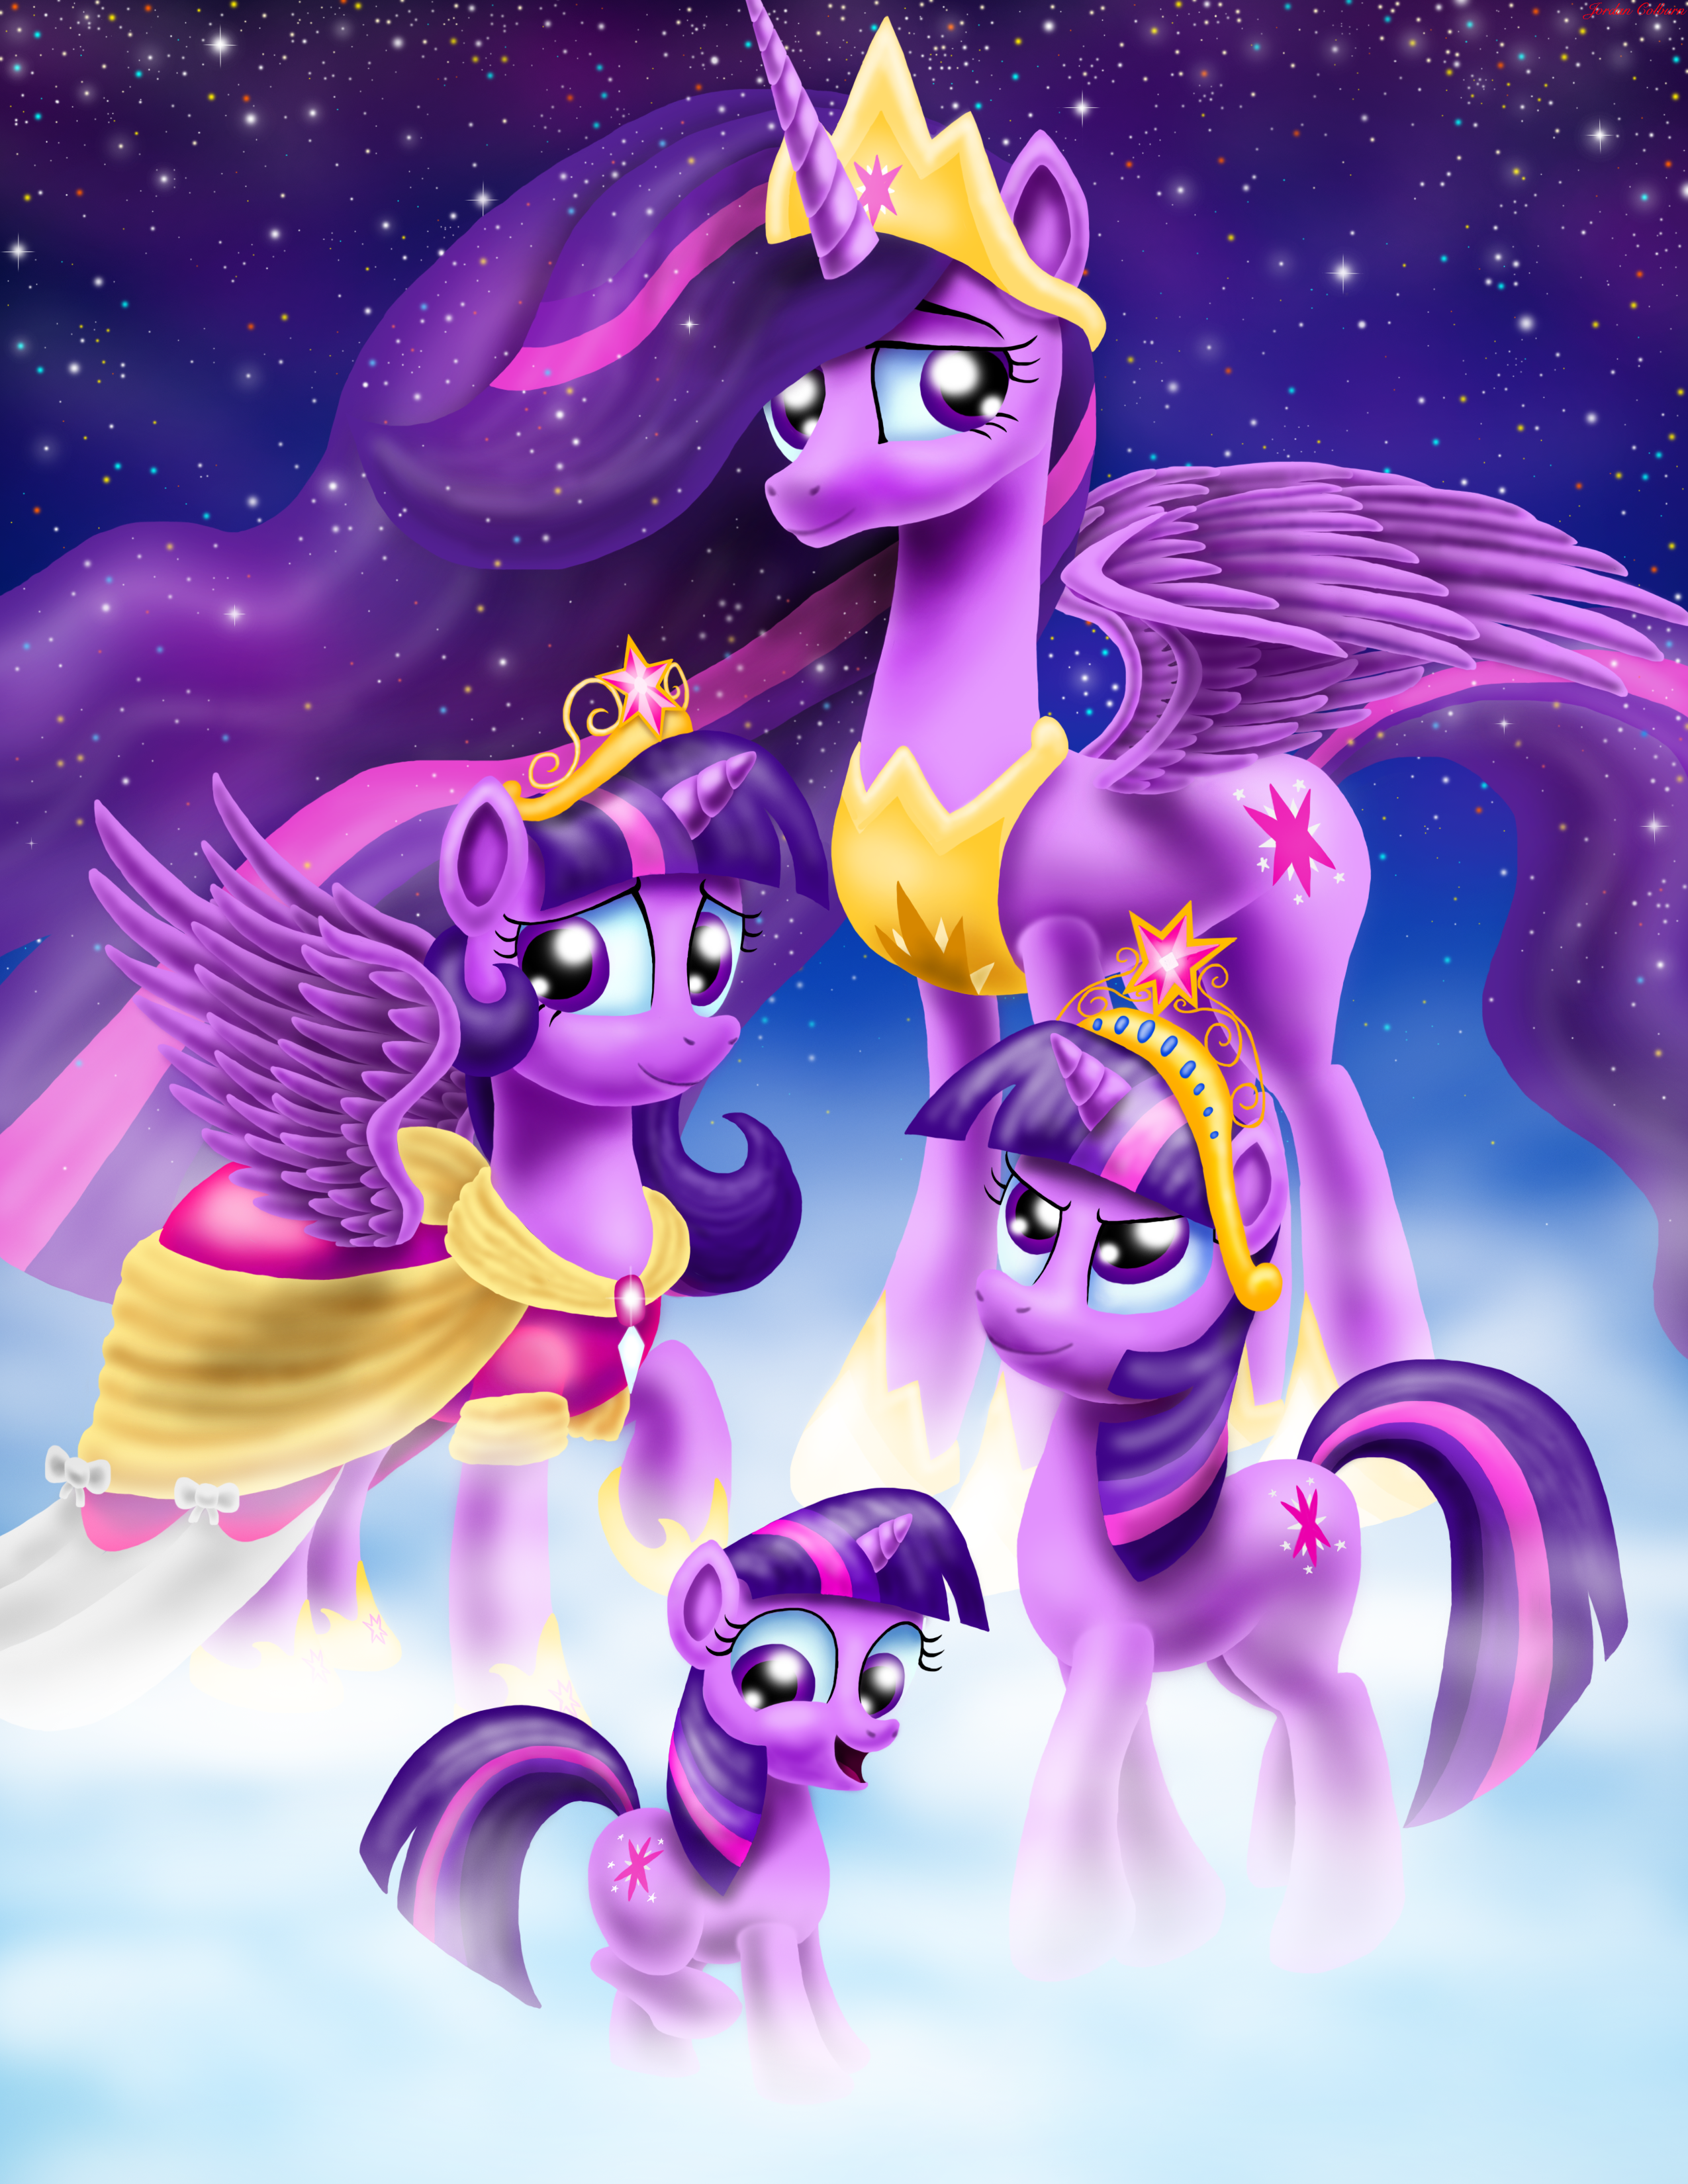 twilight sparkle pony age progression alicorn unicorn crown last problem princess clothes filly magic coronation vs wings related female shoes